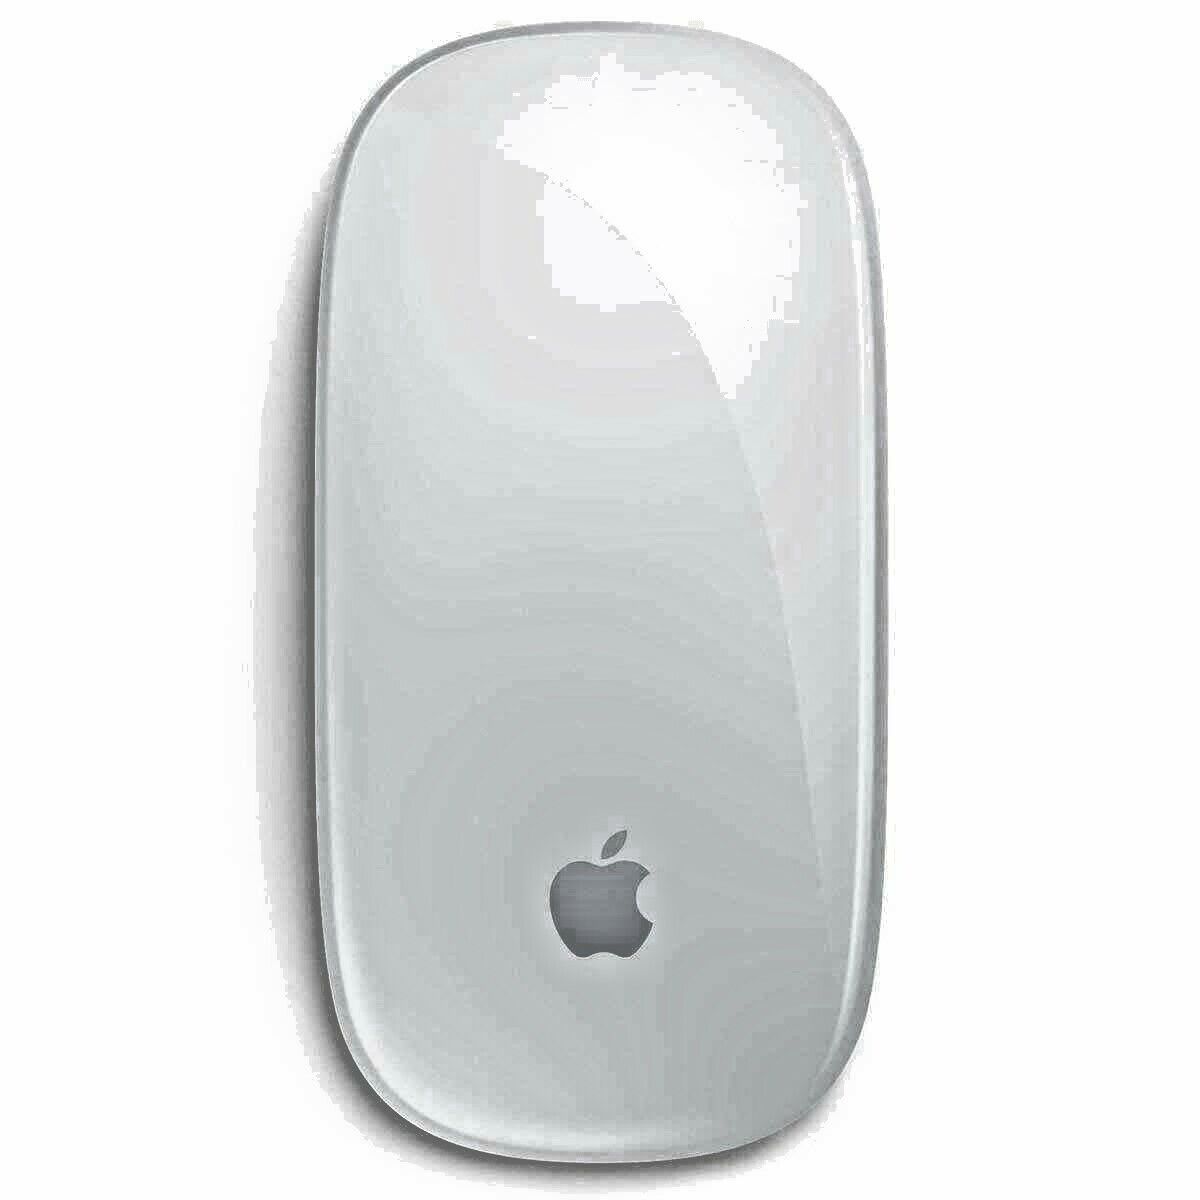 Apple Mouse-Bluetooth AA Battery Magic for iMac Mac Mini Macbook Pro First Gen N